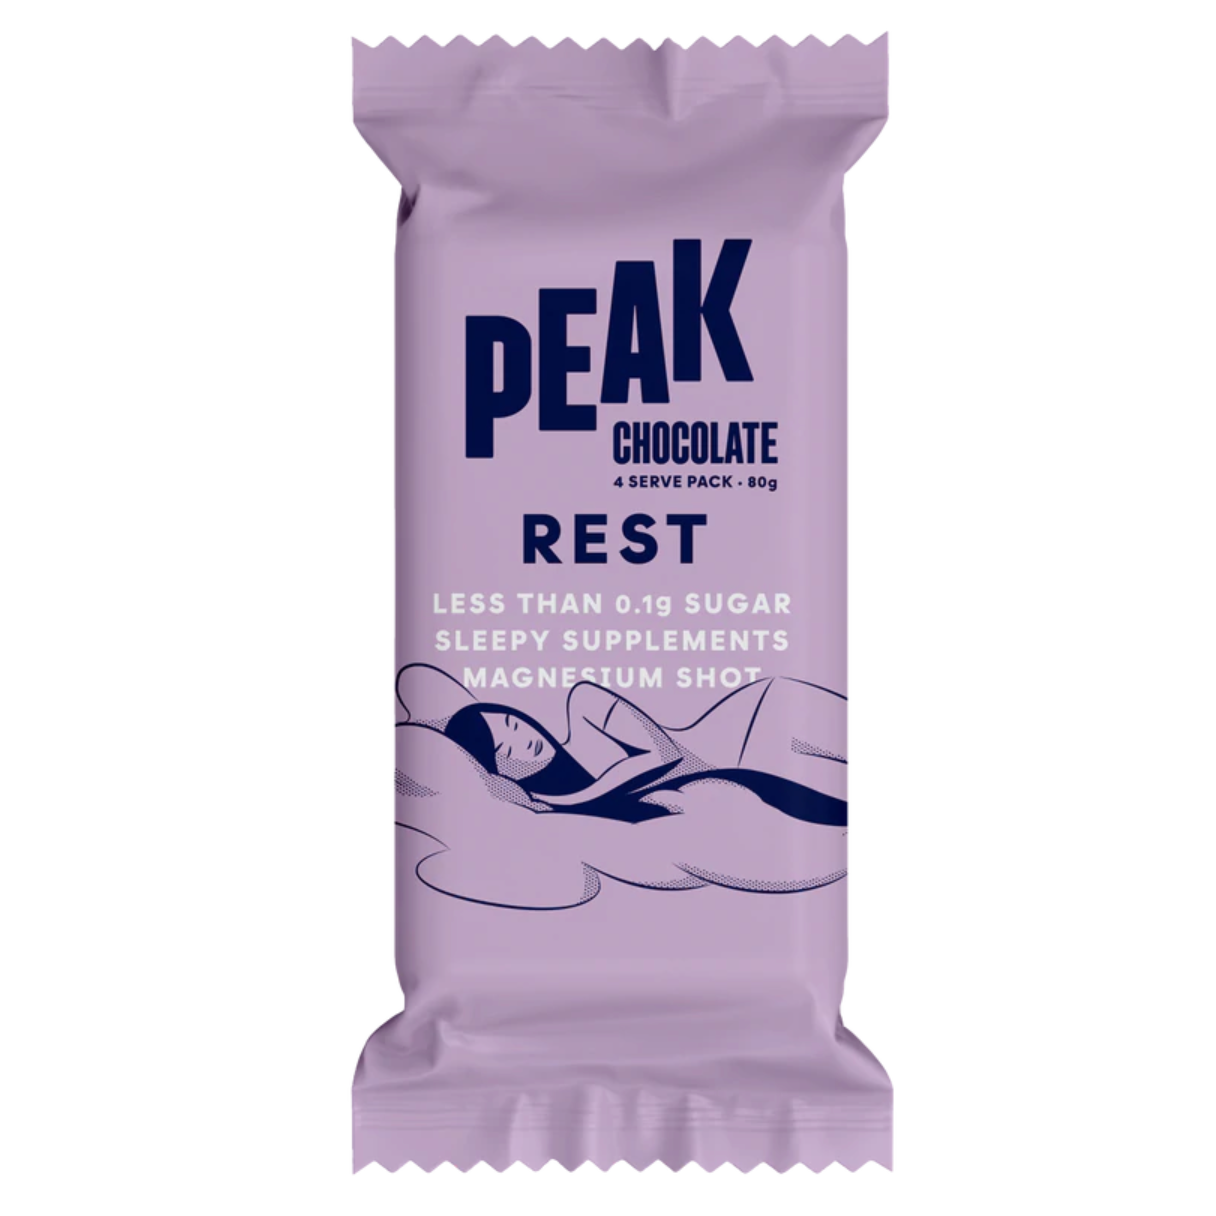 Peak Energy Chocolate 80g, Rest